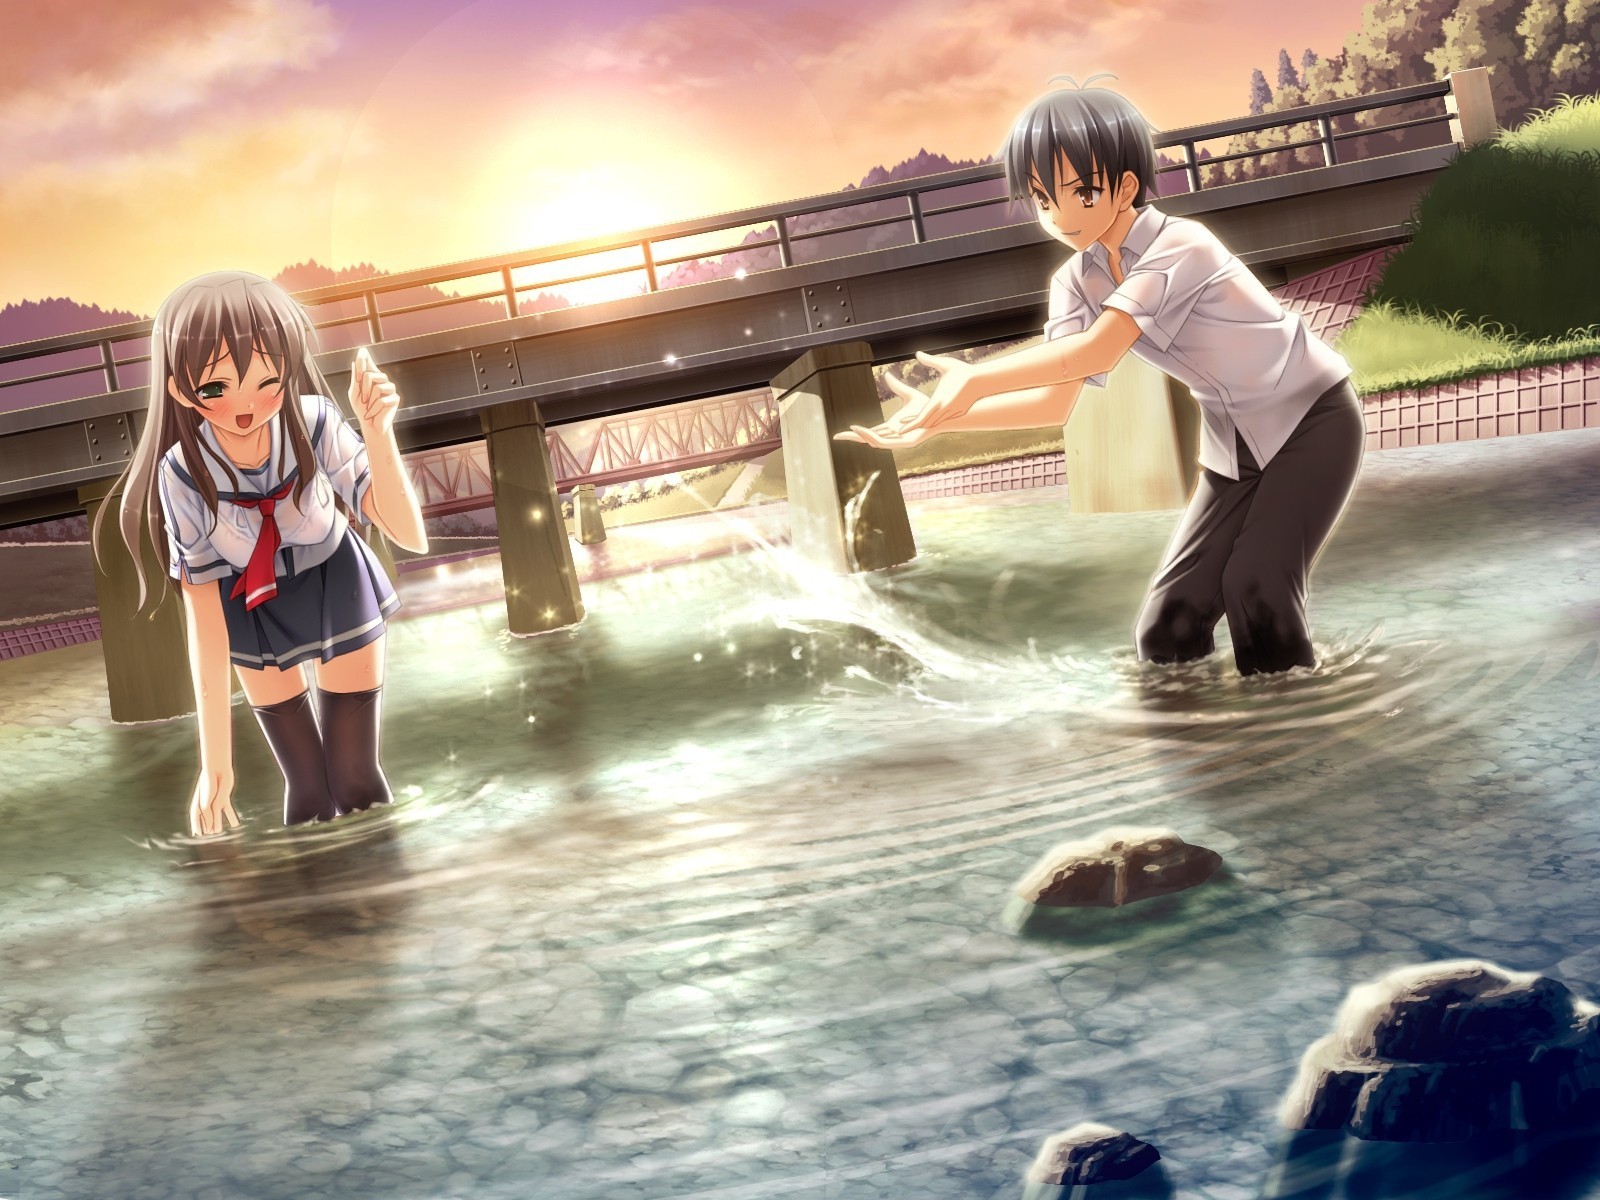 Anime 1600x1200 anime anime girls school uniform Natsu no Ame anime boys Kantoku in water outdoors bridge